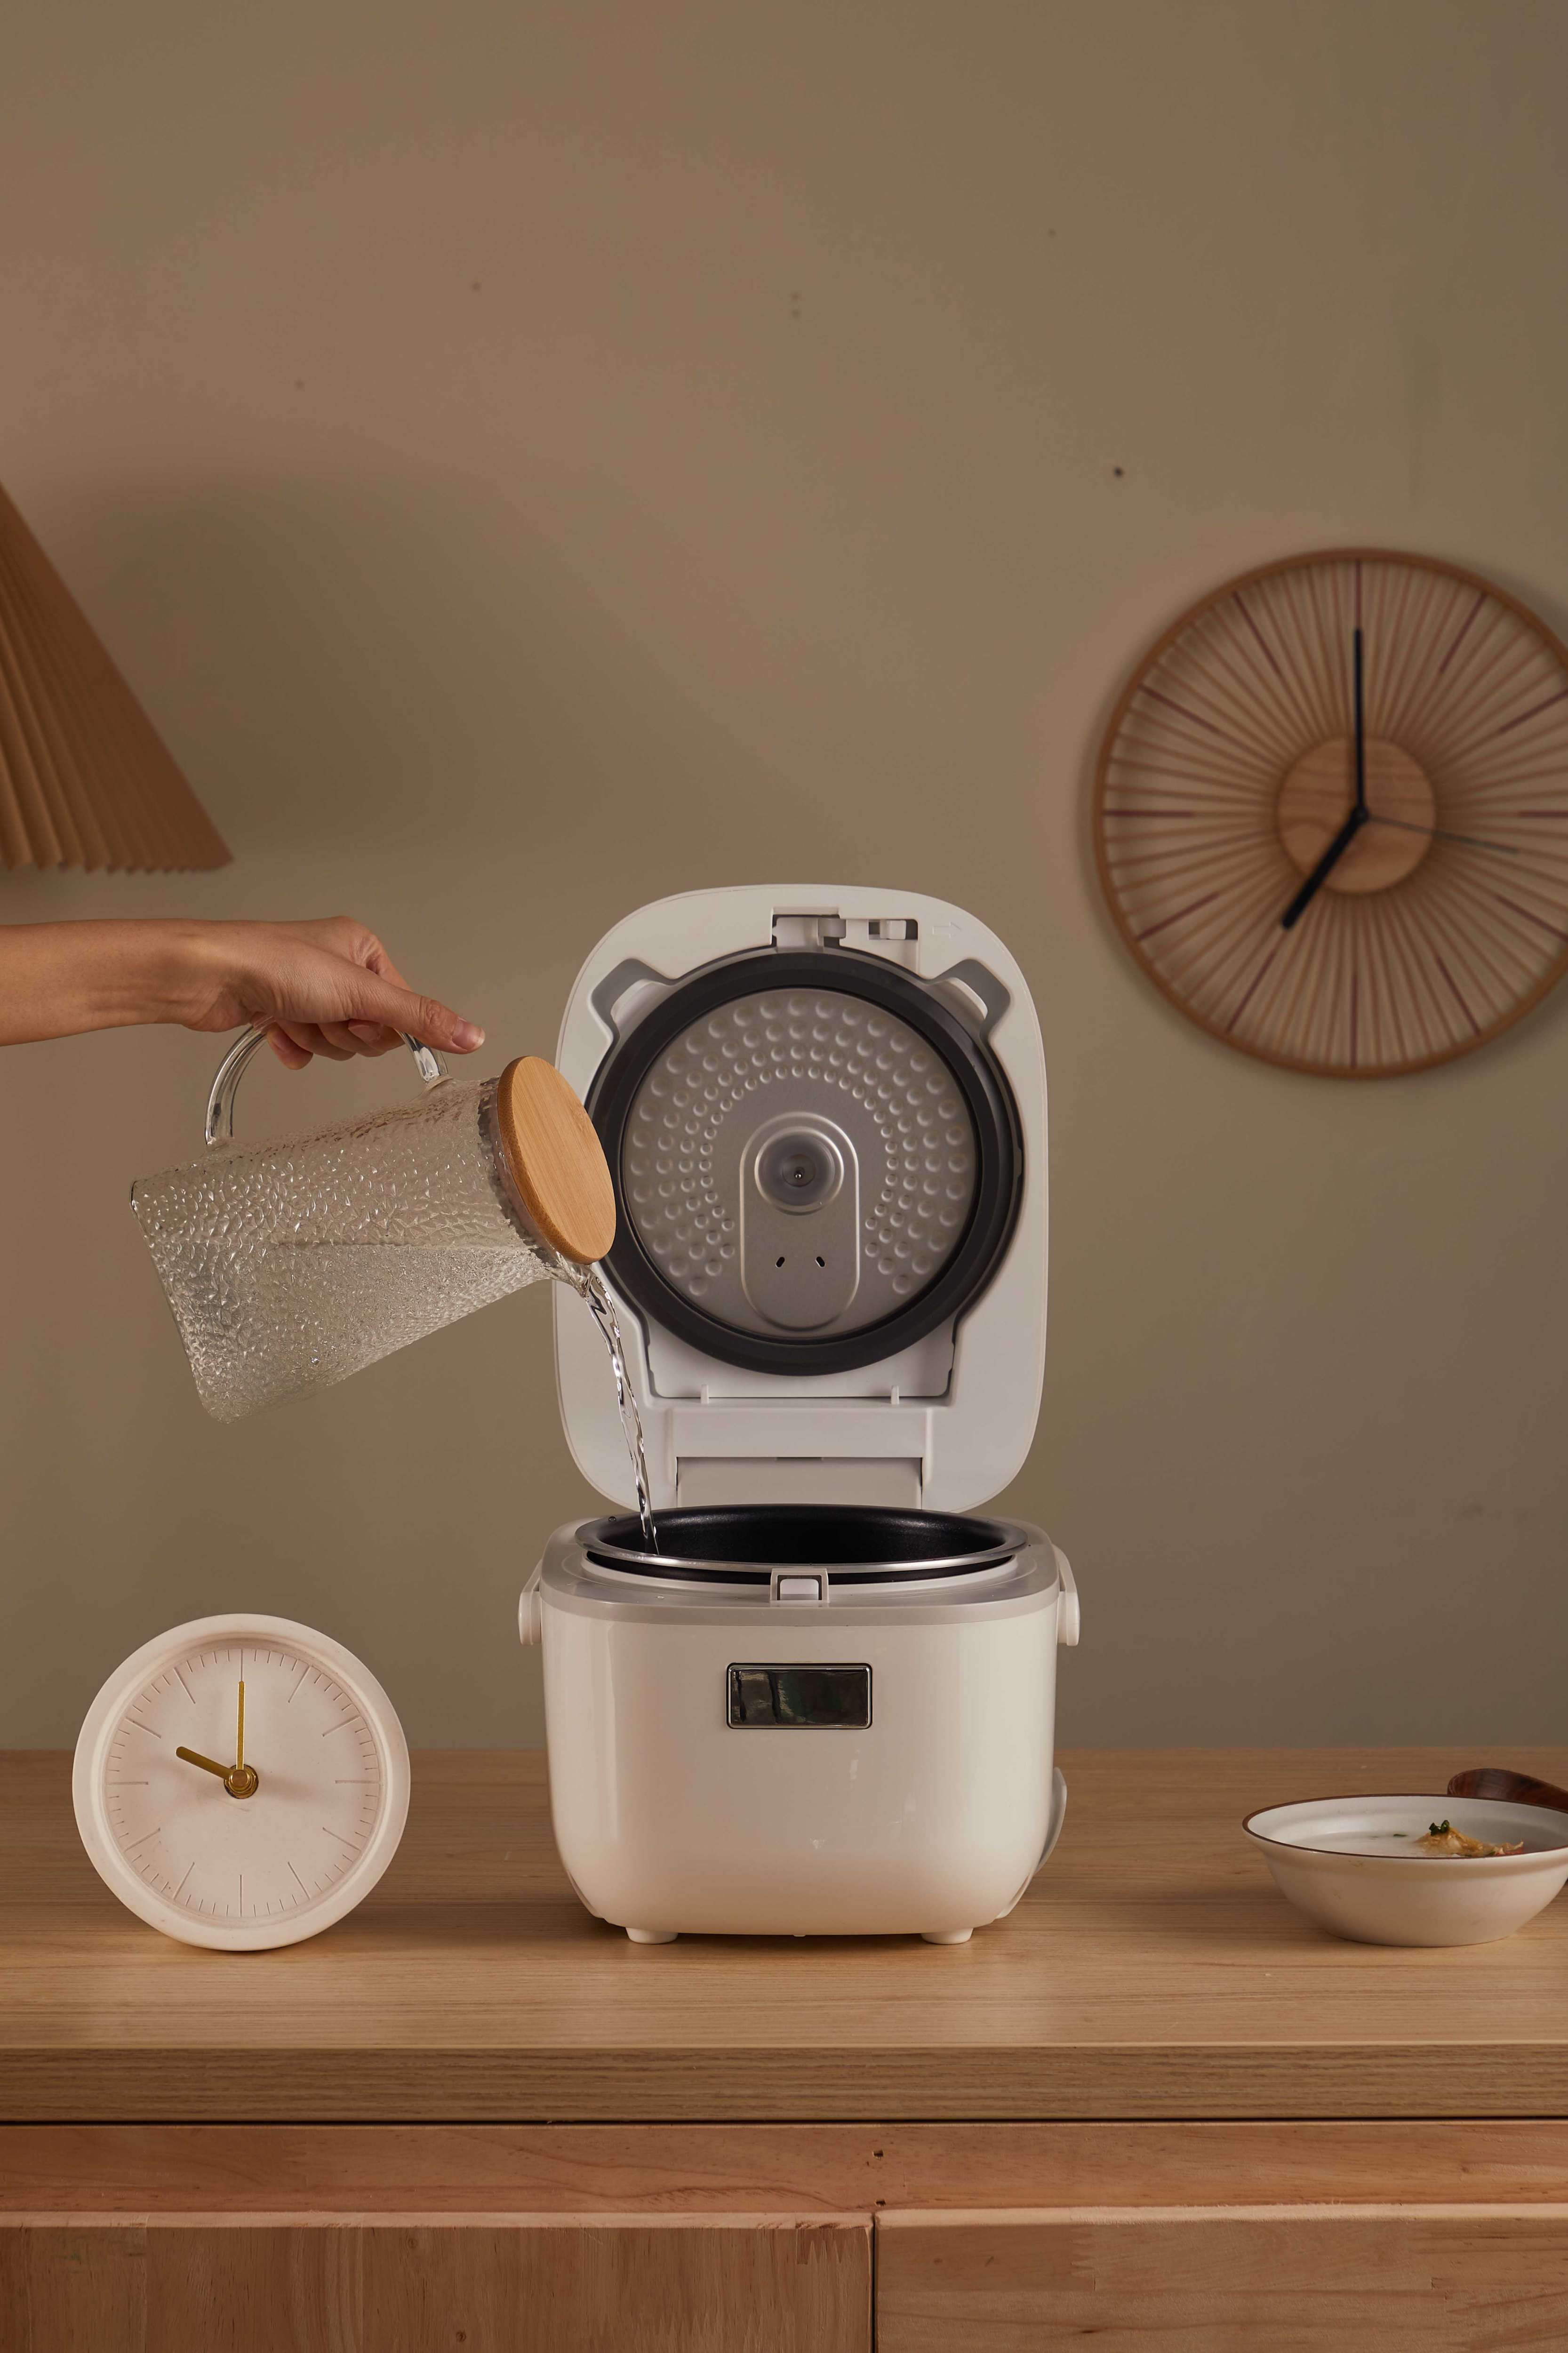 Toshiba Digital Programmable Rice Cooker, Steamer & Warmer, 3 Cups